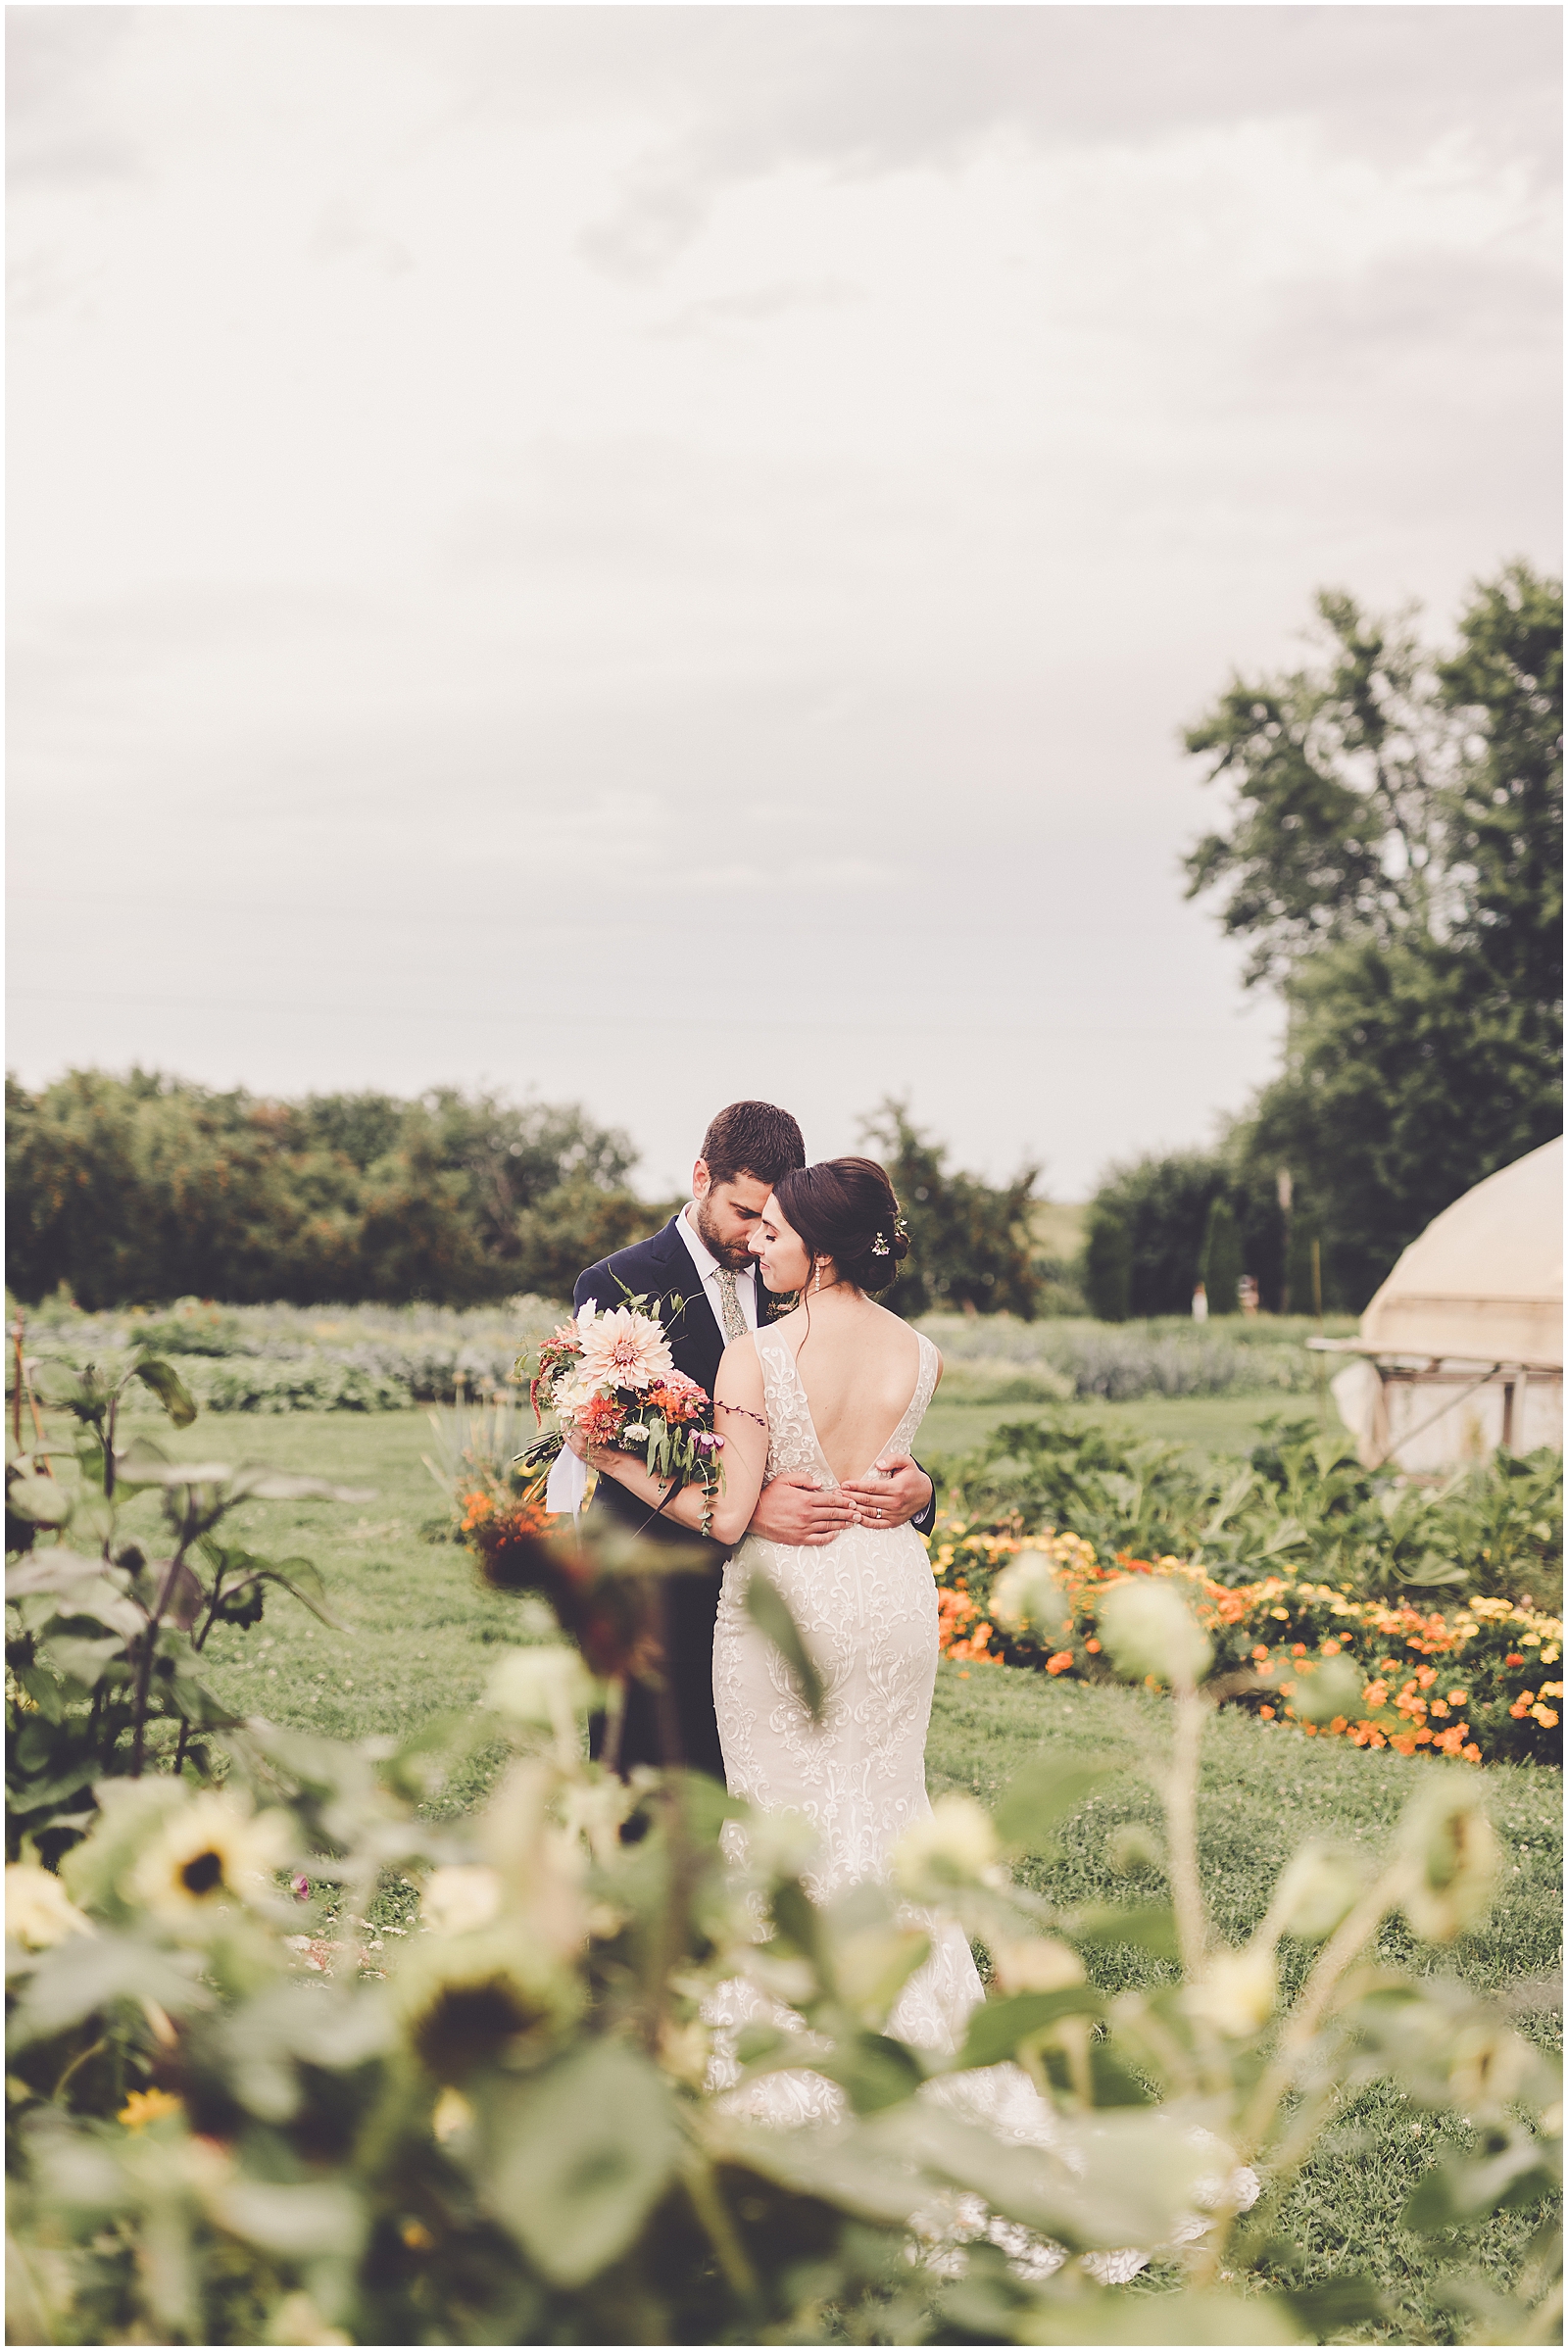 Gabby & Andrew's summer Heritage Prairie Farm wedding photos in Elburn with Chicagoland wedding photographer Kara Evans Photographer.